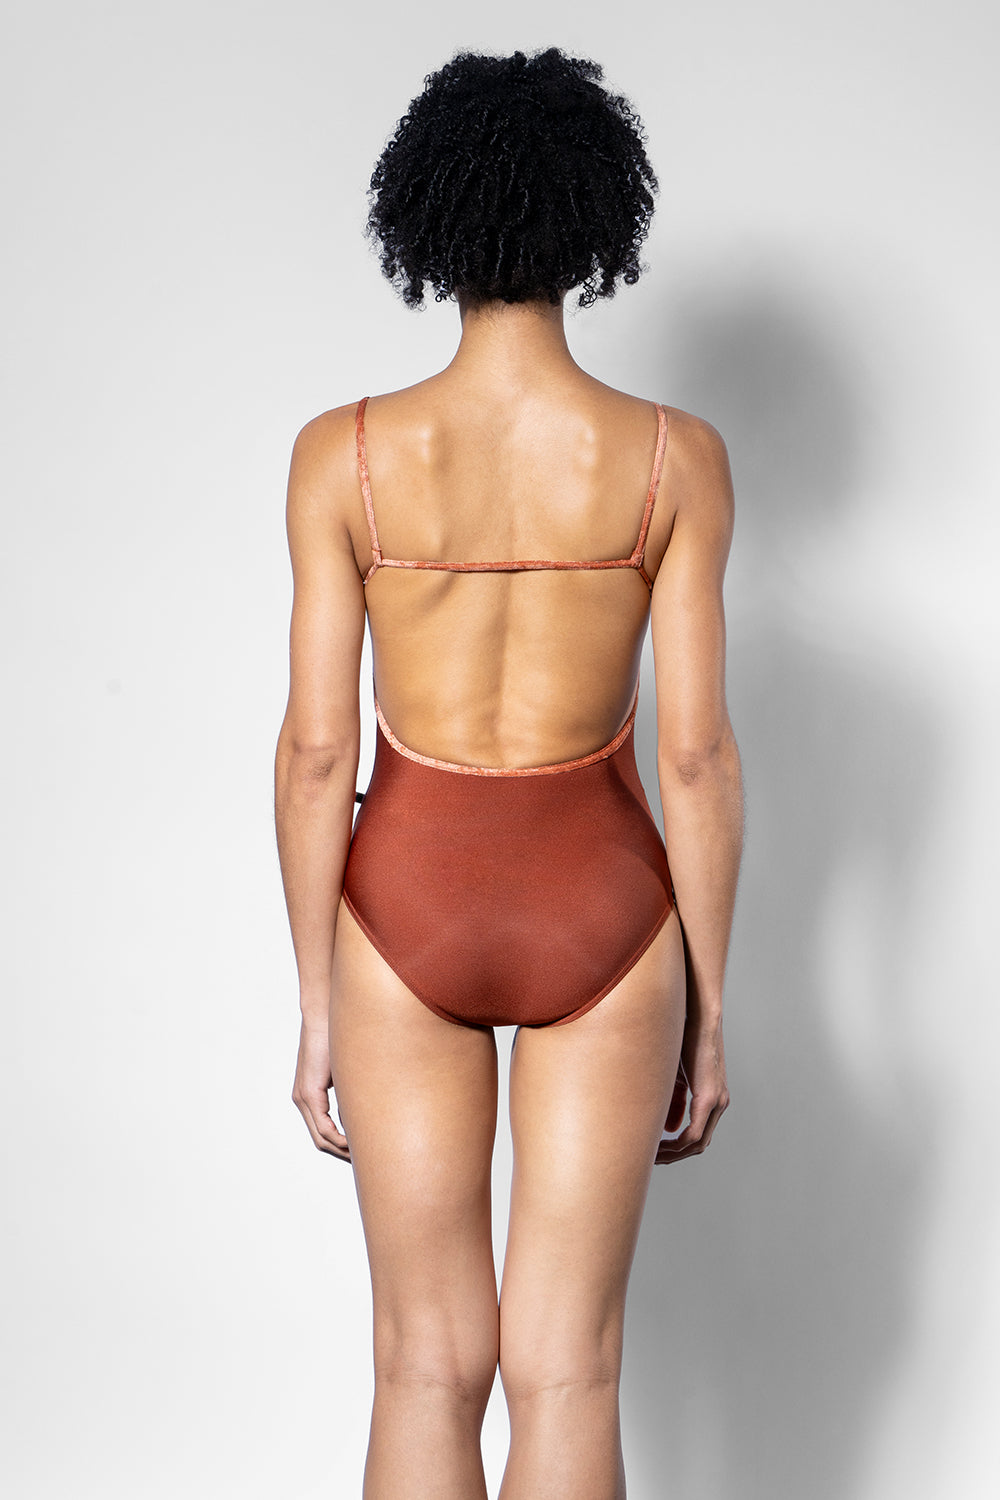 Tamara leotard in N-Bronze body color with CV-Amaretto trim color